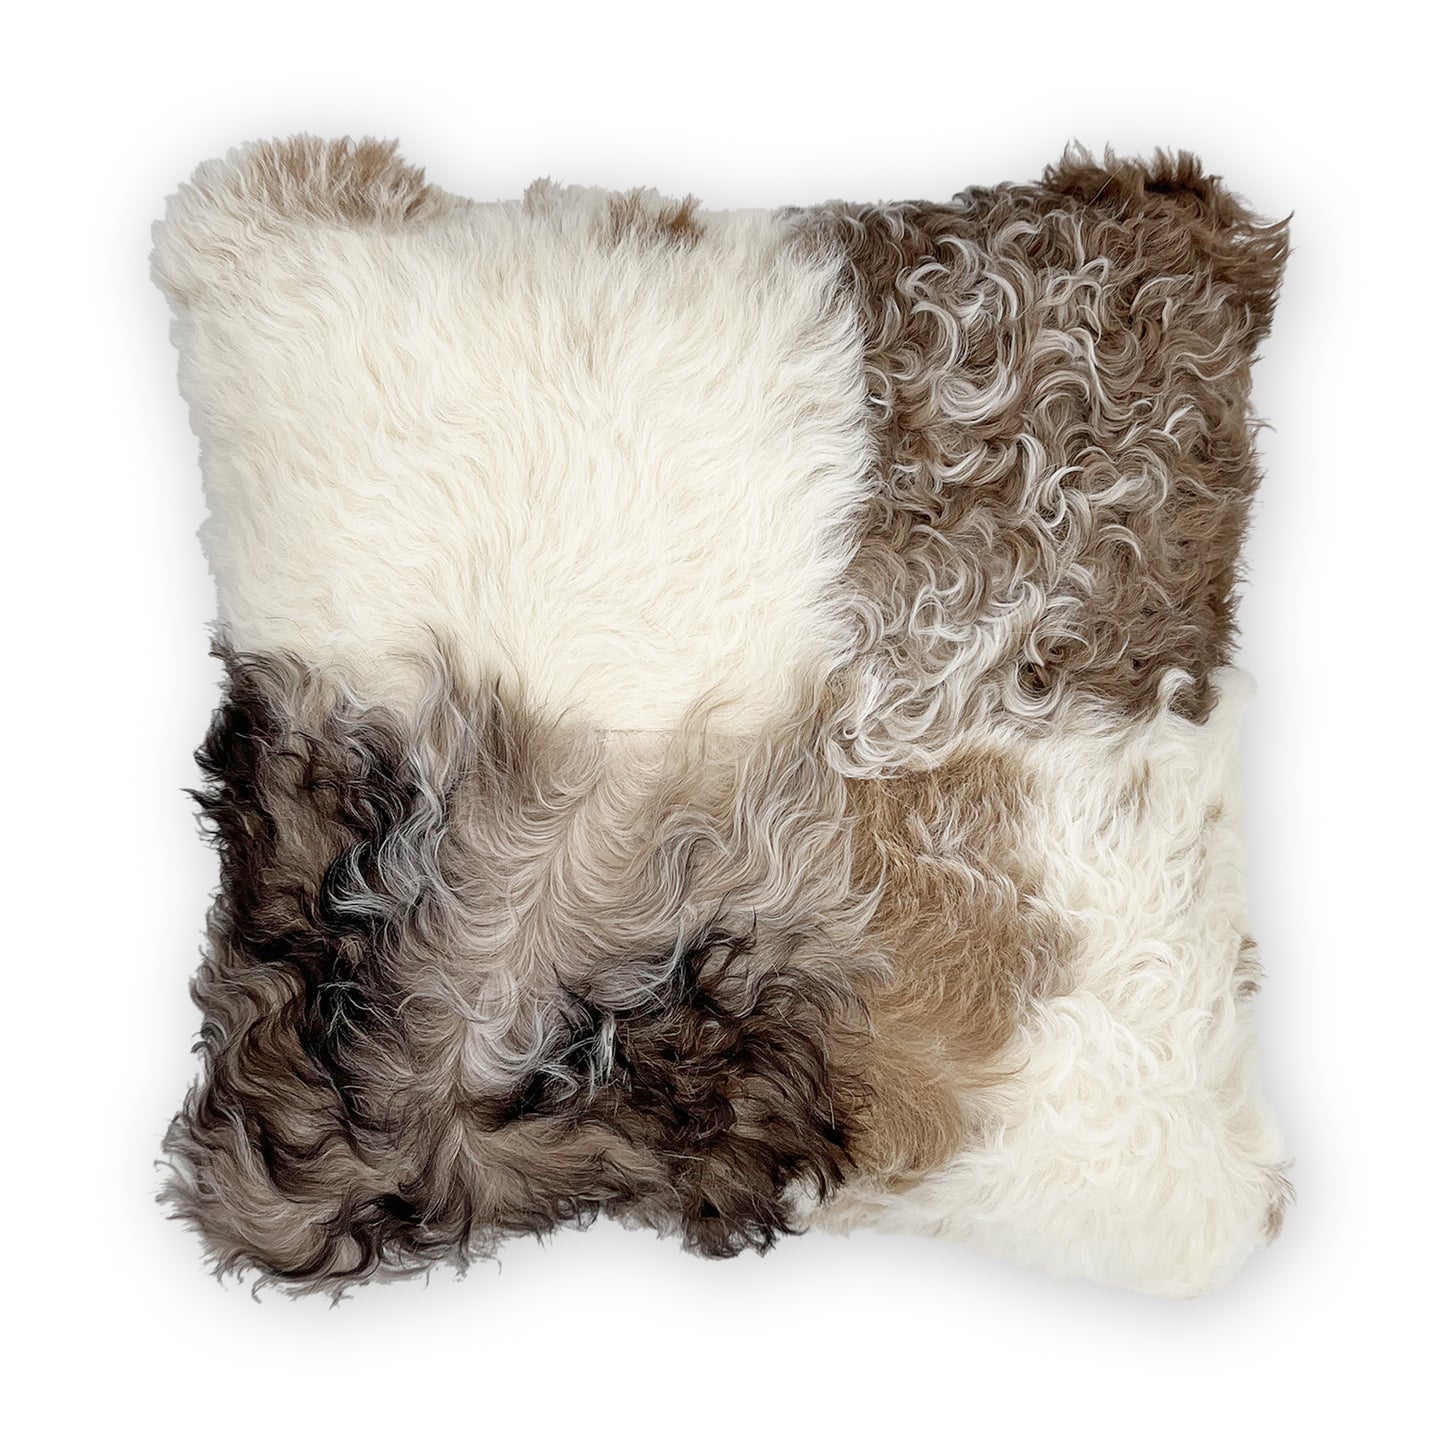 The Mood Tigrado Spanish Lambskin Patchwork Pillow, 18x18 in., Multicolor